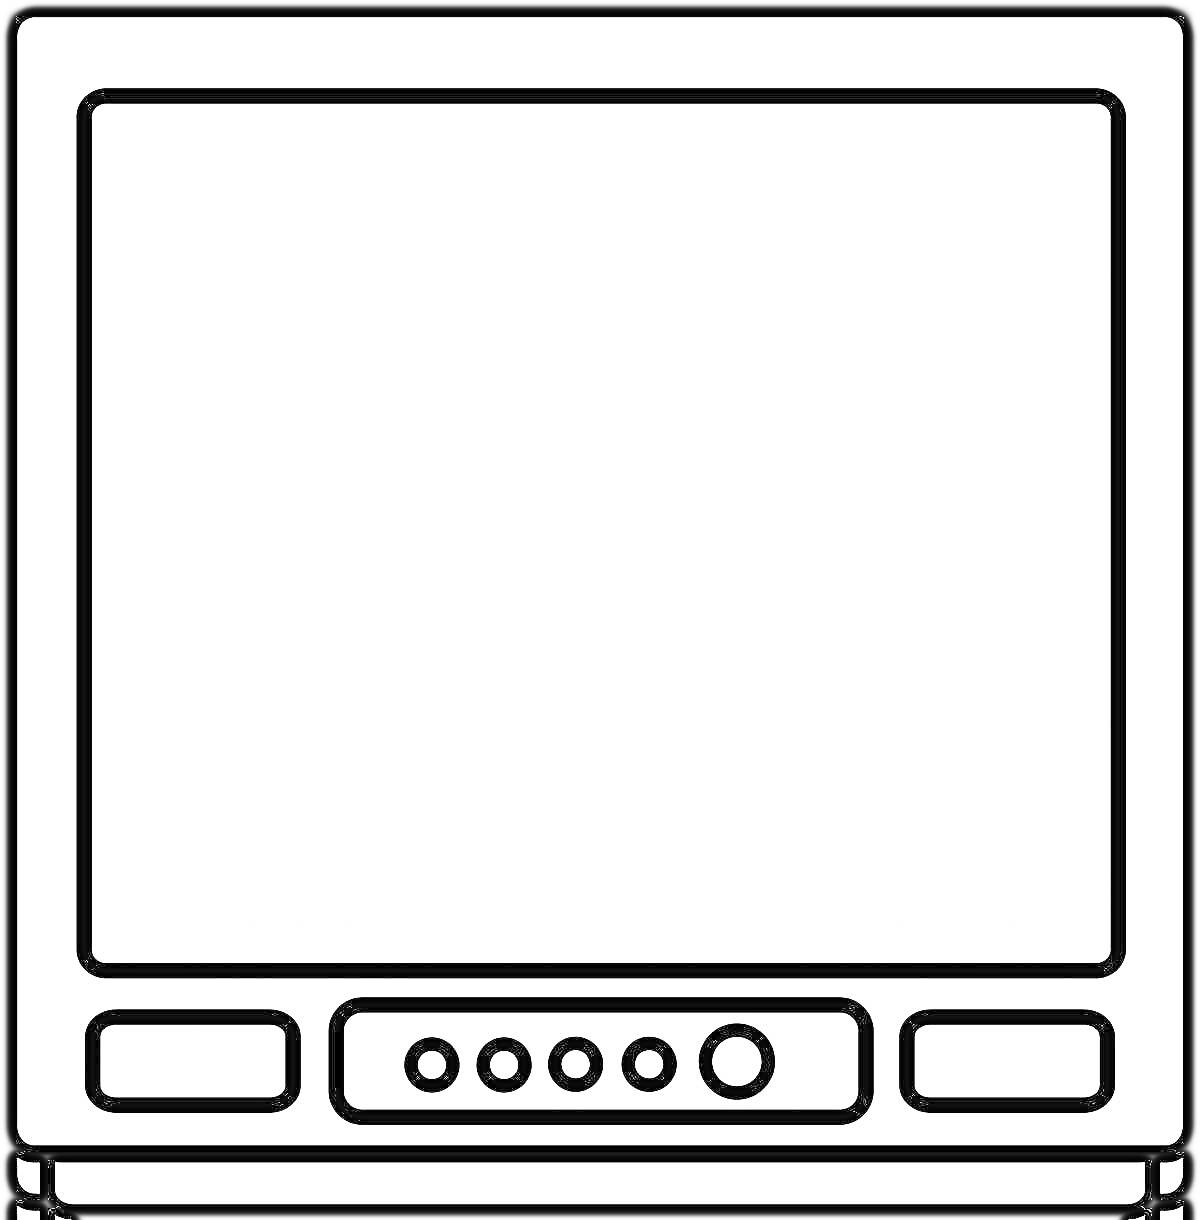 На раскраске изображено: Экран, Телевизор, Кнопки, Электроника, Монитор, Контурные рисунки